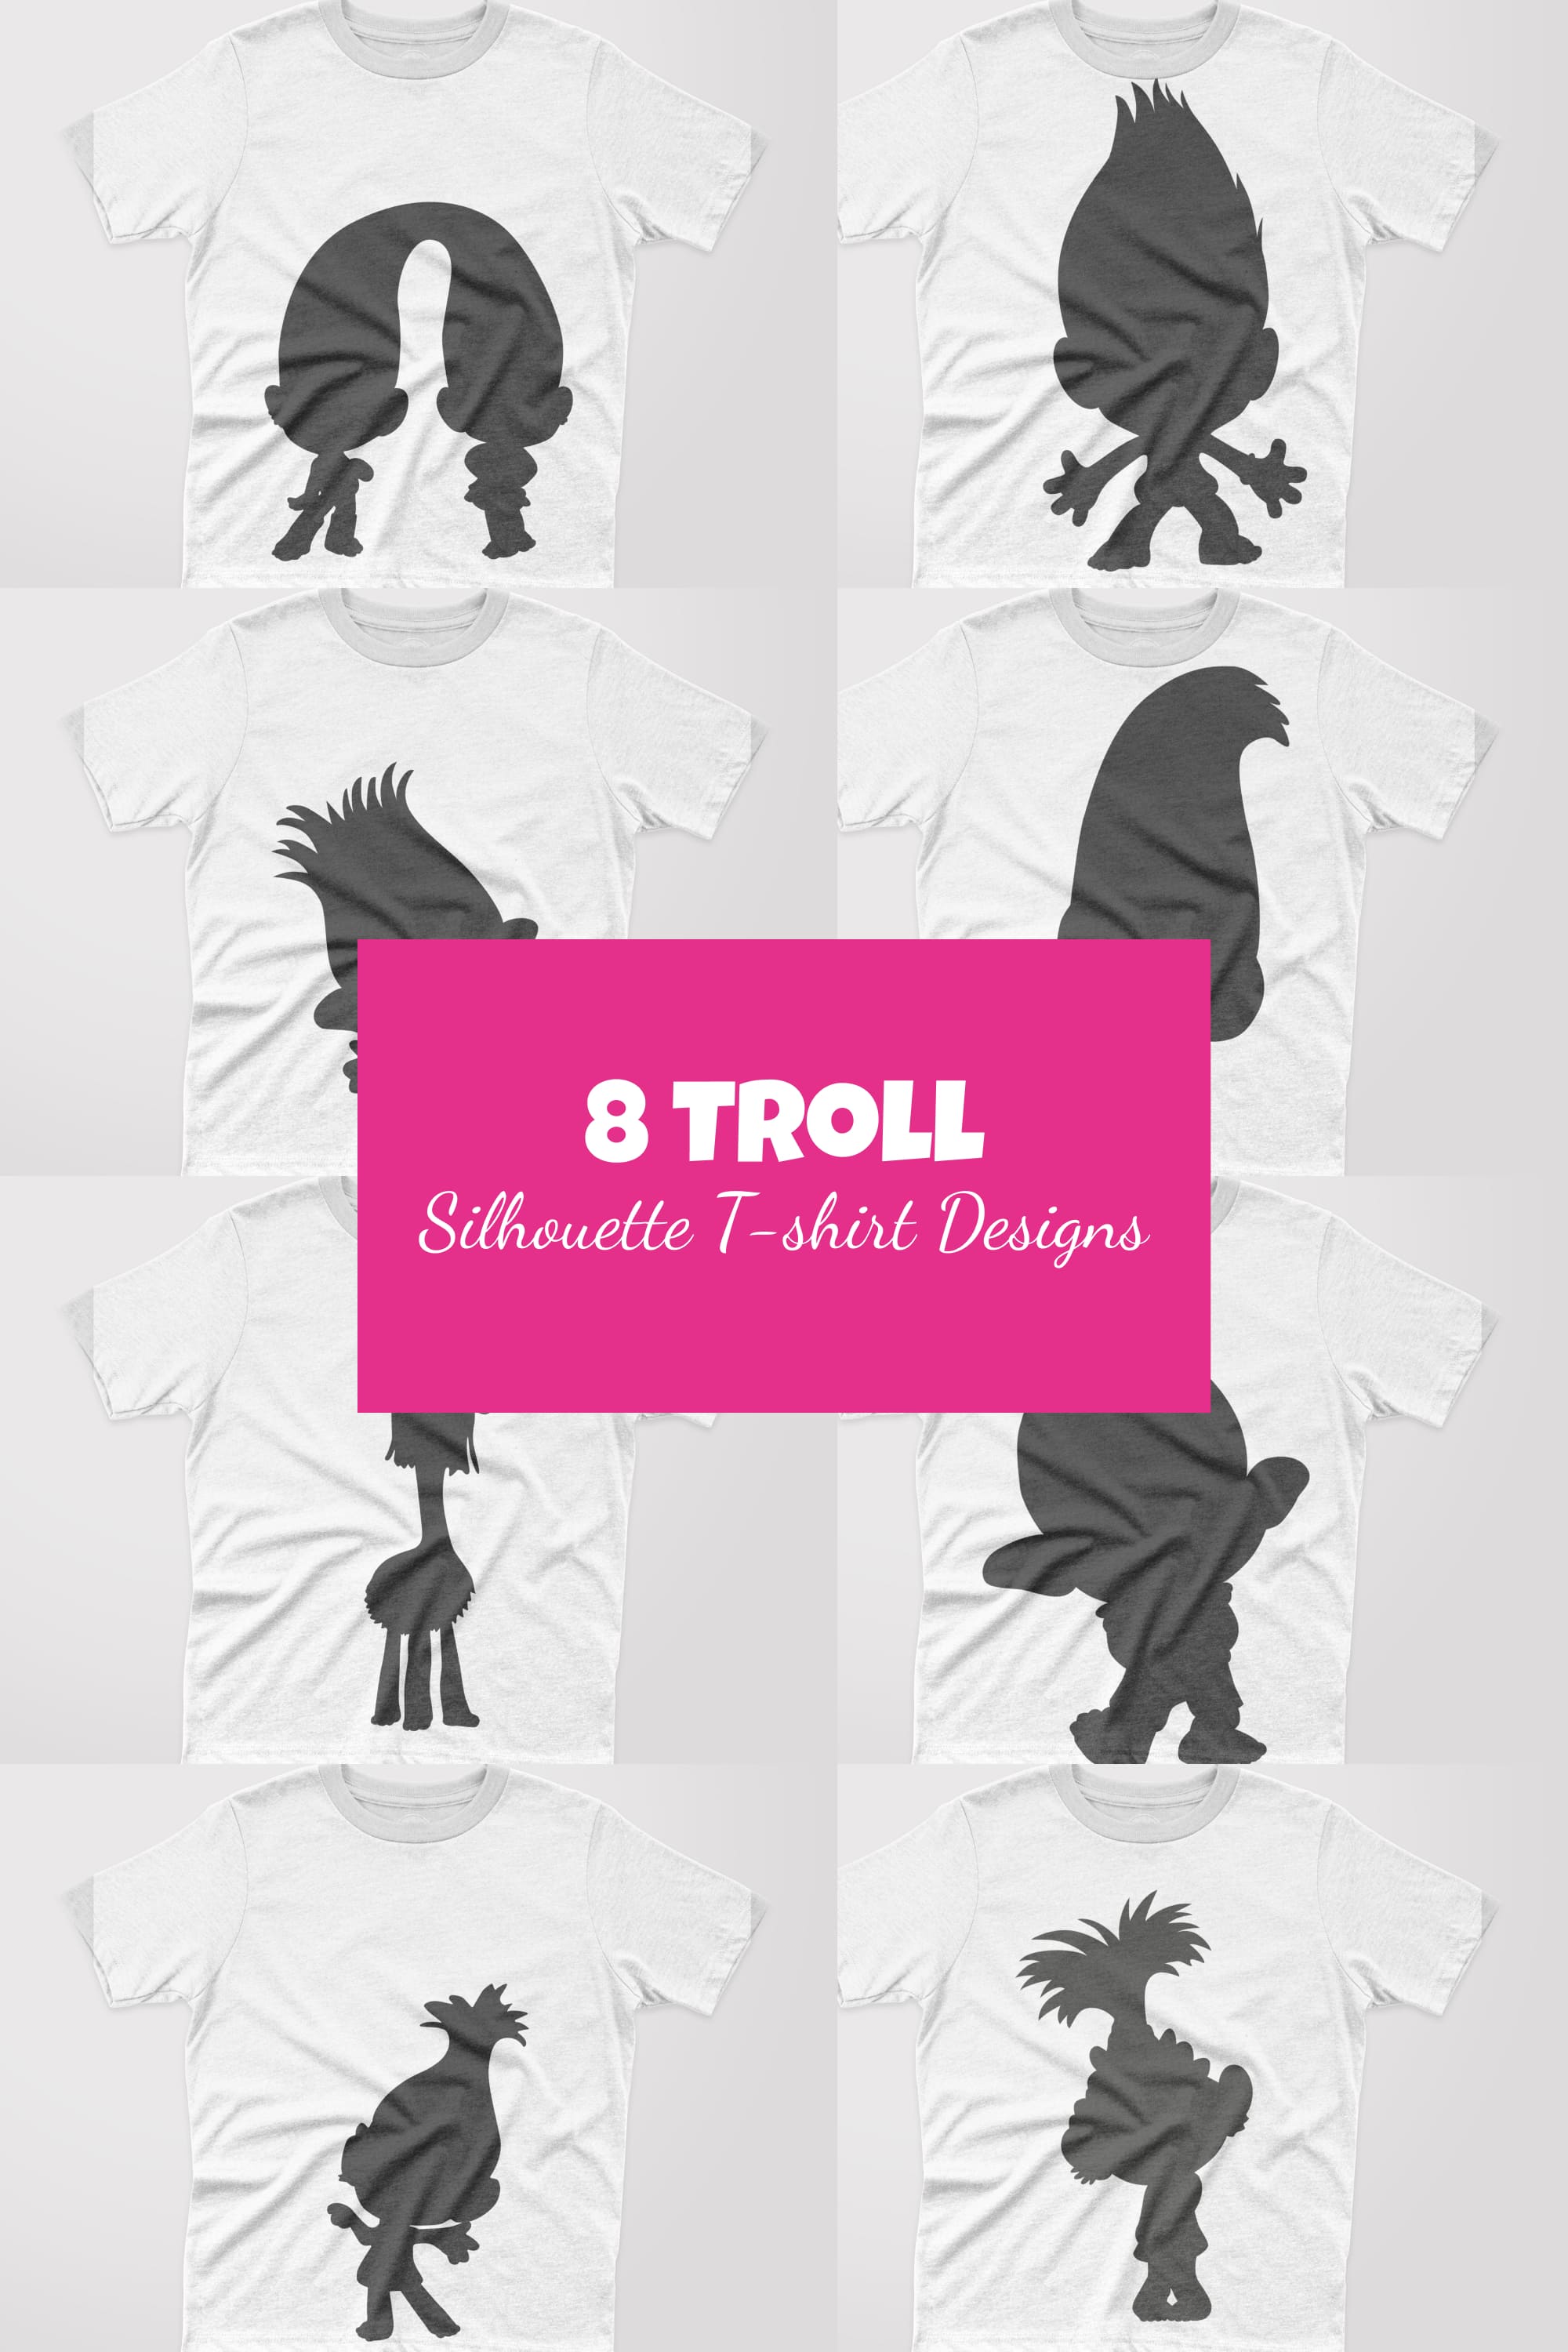 8 Troll Silhouette T-shirt Designs - Pinterest.